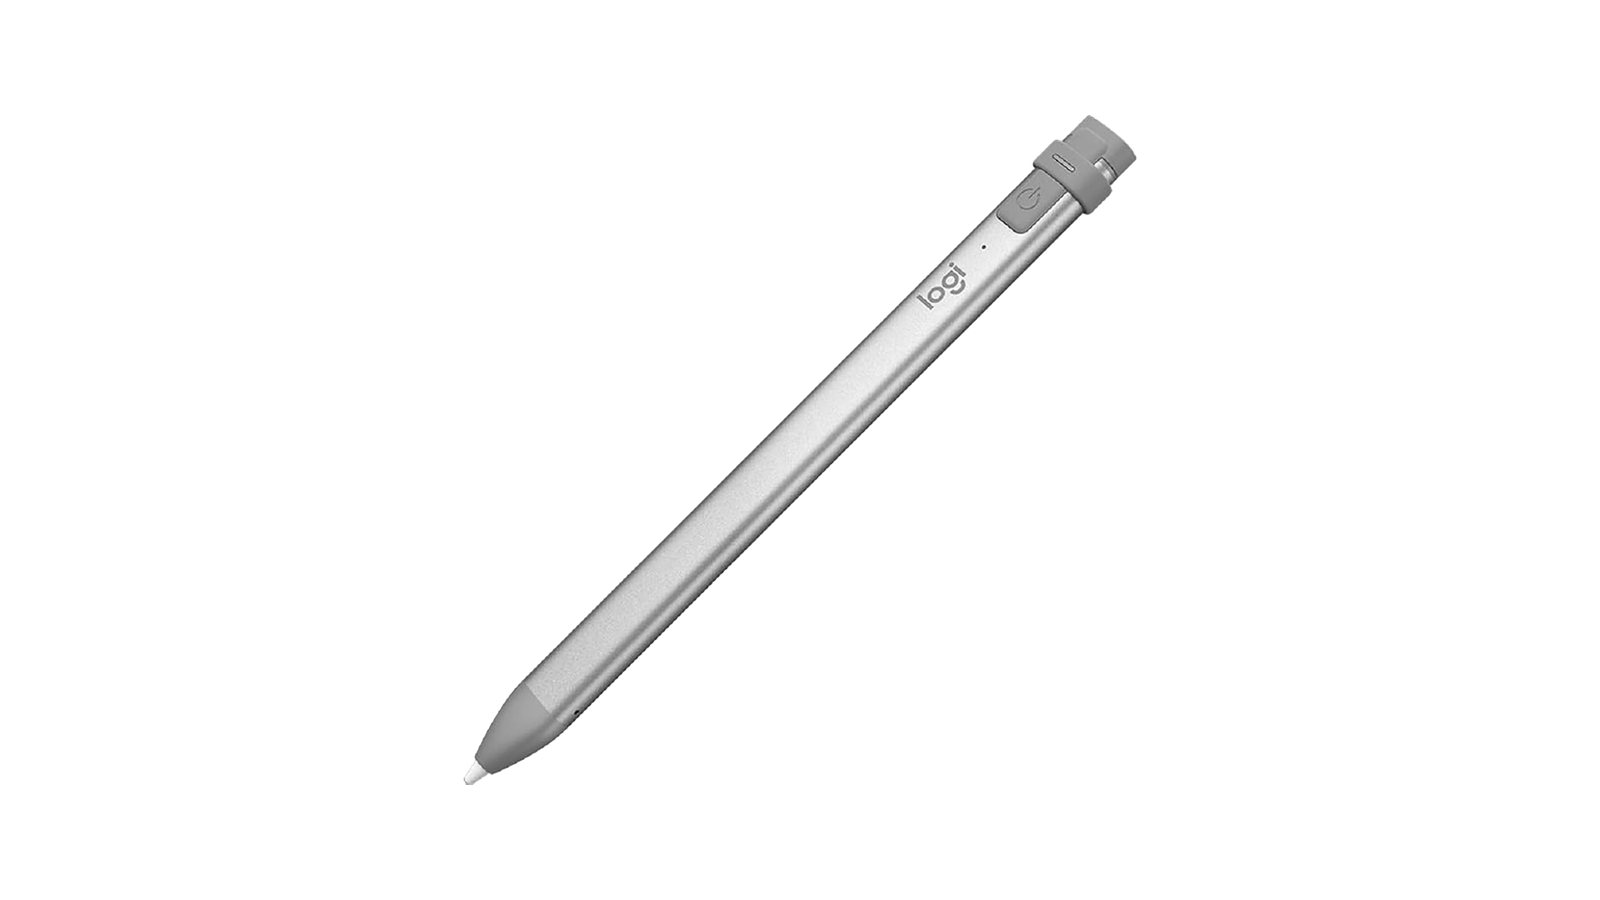 Logitech Crayon - Most ergonomic iPad stylus